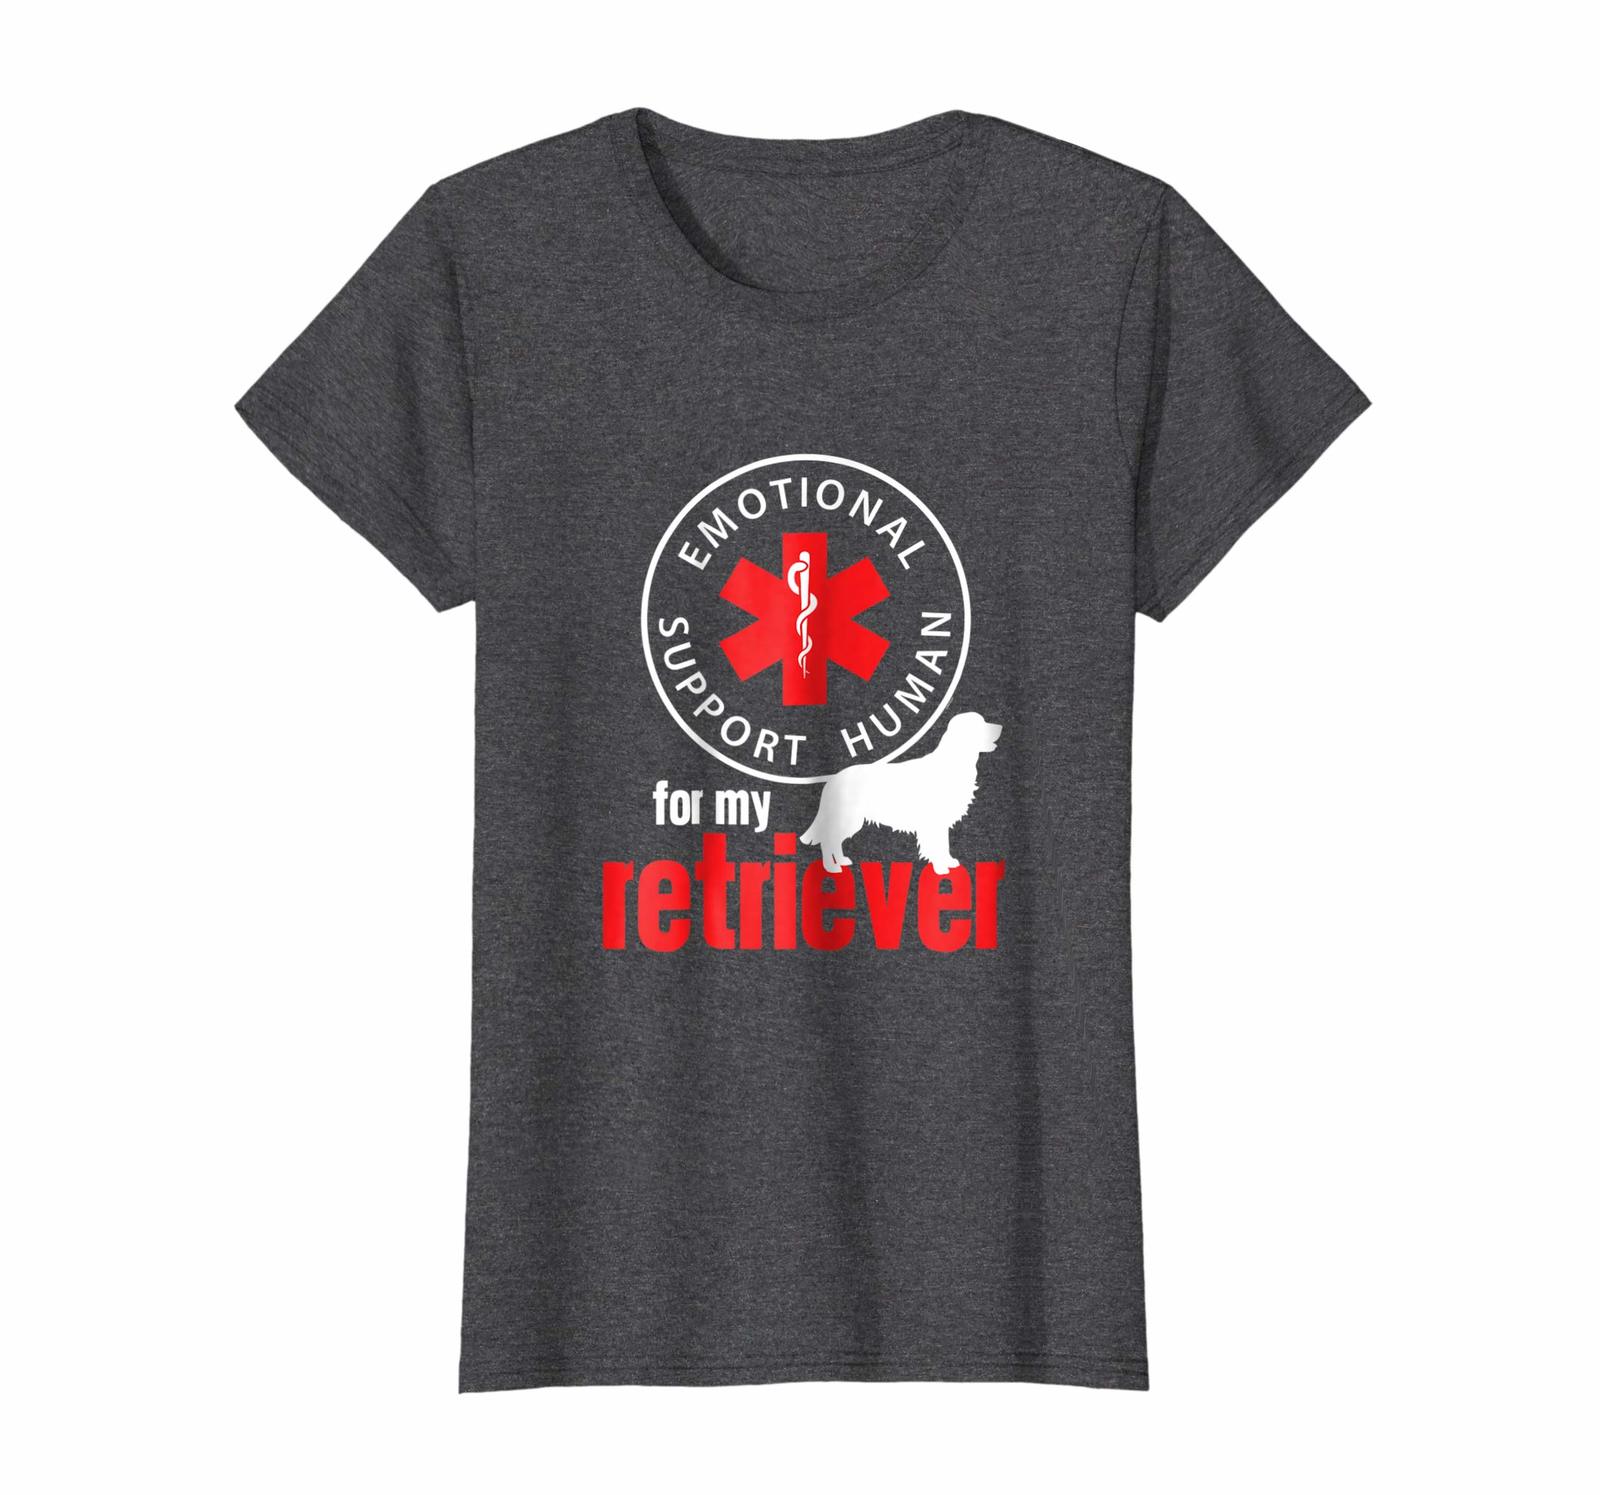 Dog Fashion - Emotional Support Human for my Retriever - Dog Lover Shirt Wowen